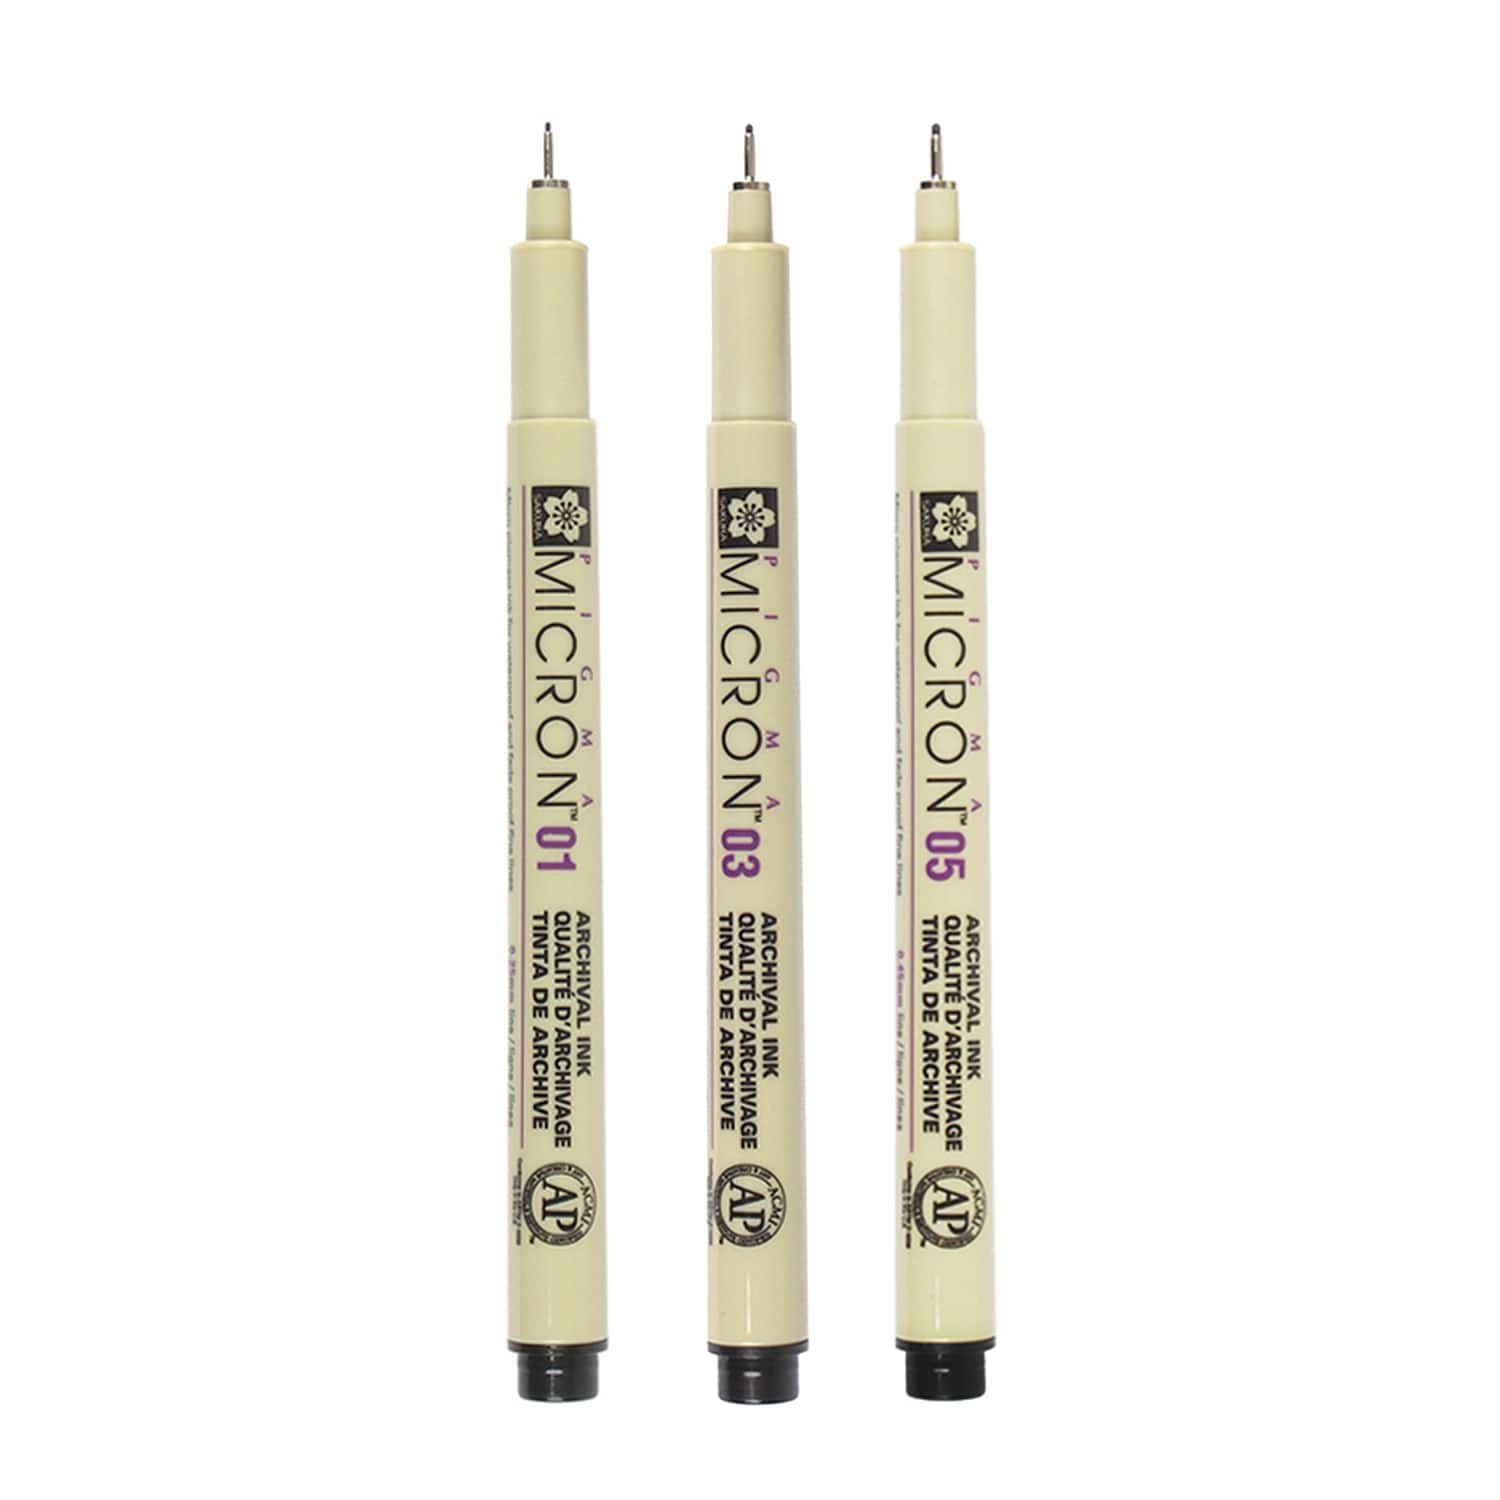 Sakura Microperm Fine-line Pen Set Set Of 3 [pack Of 3] 74153-pk3 : Target